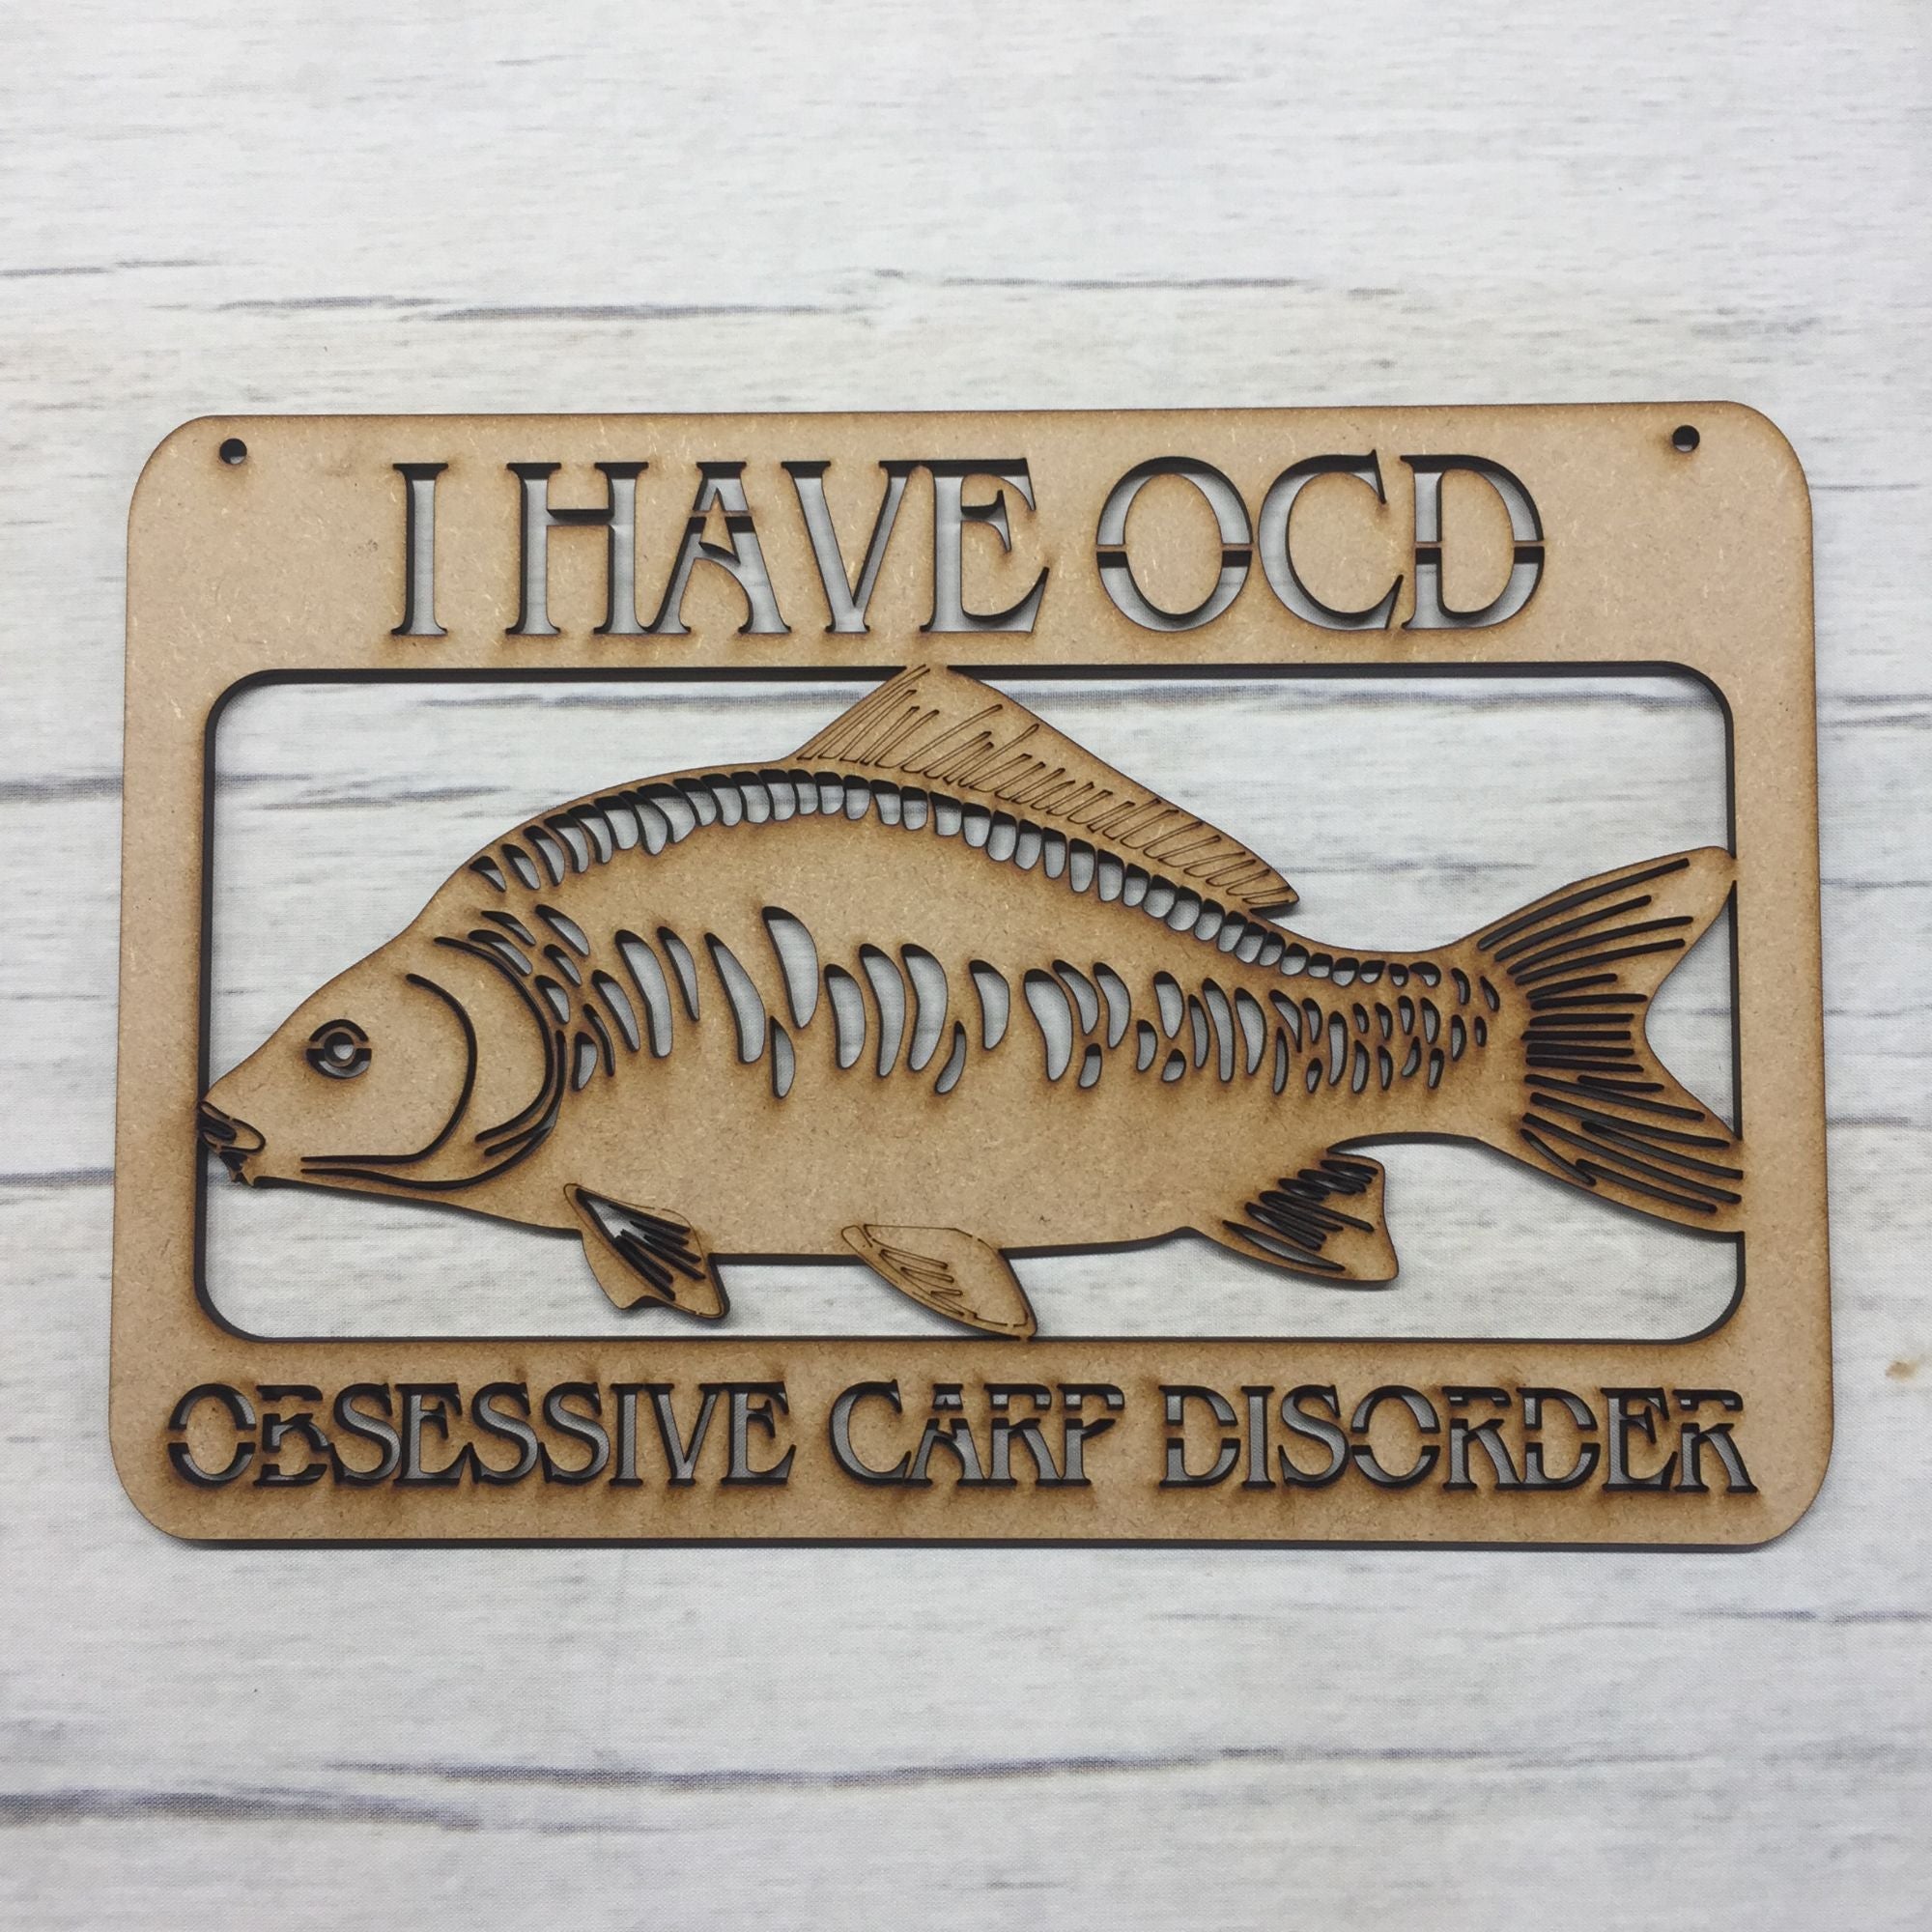 Base MDF - OCD - 'Obsessive Carp Disorder' door plaque